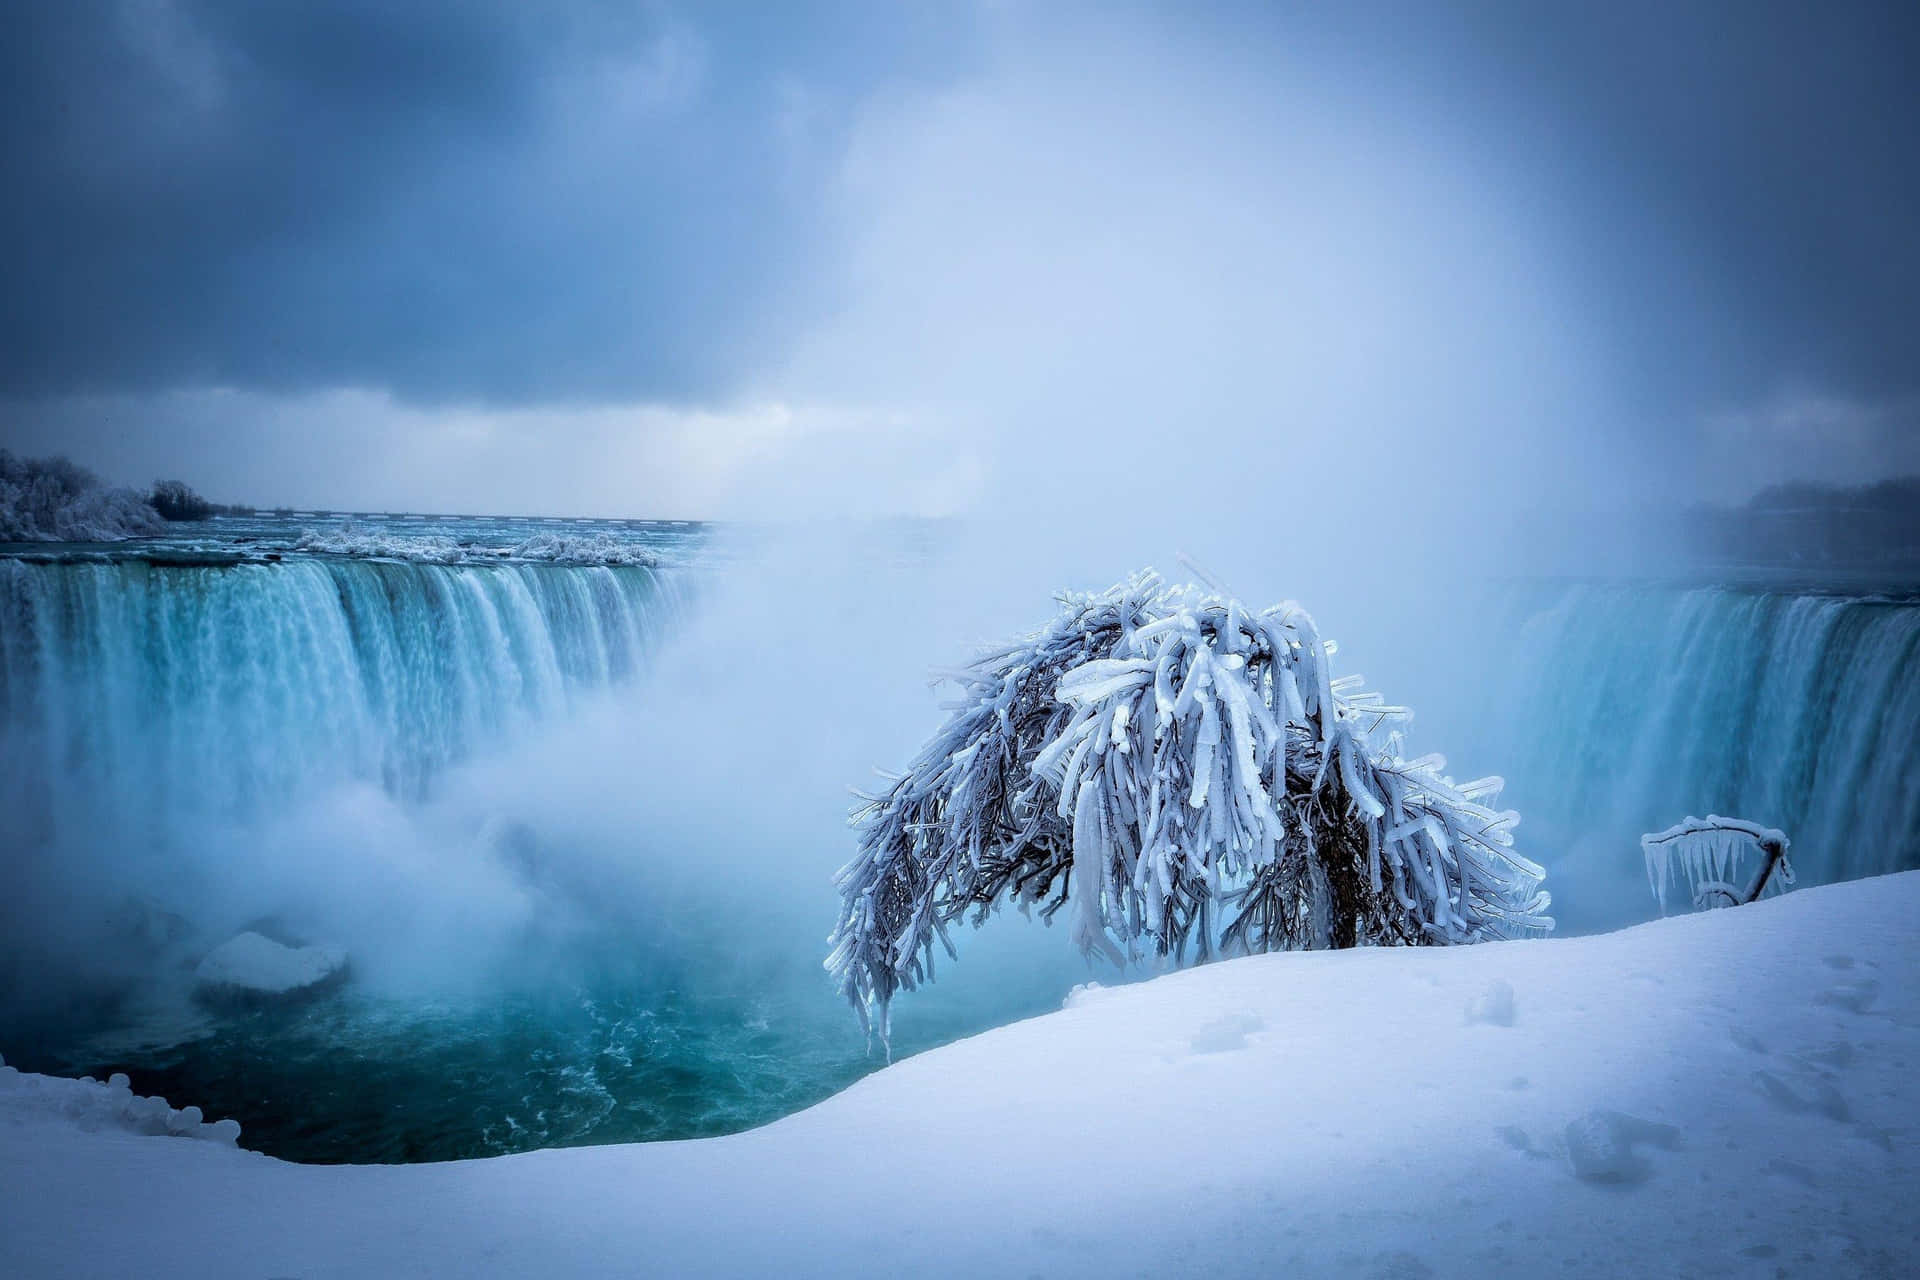 The majestic Niagara Falls, Canada